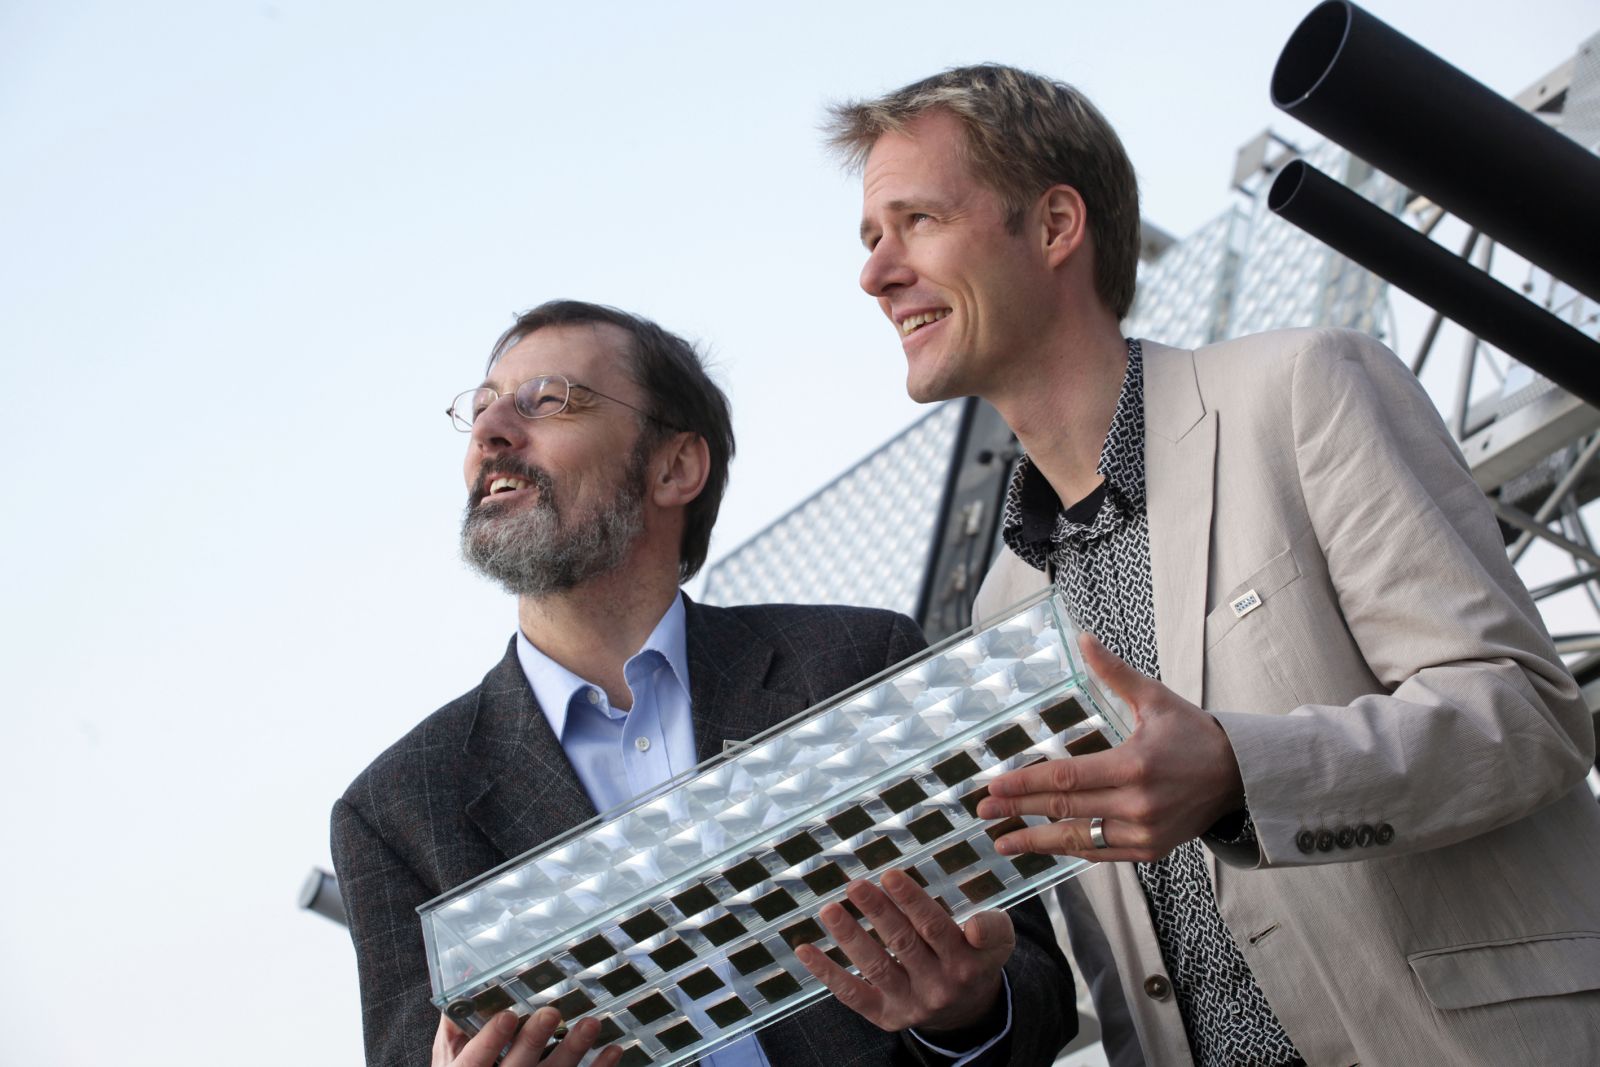 Joseph von Fraunhofer Prize 2010: Andreas Bettt and Dr. Frank Dimroth from Fraunhofer ISE